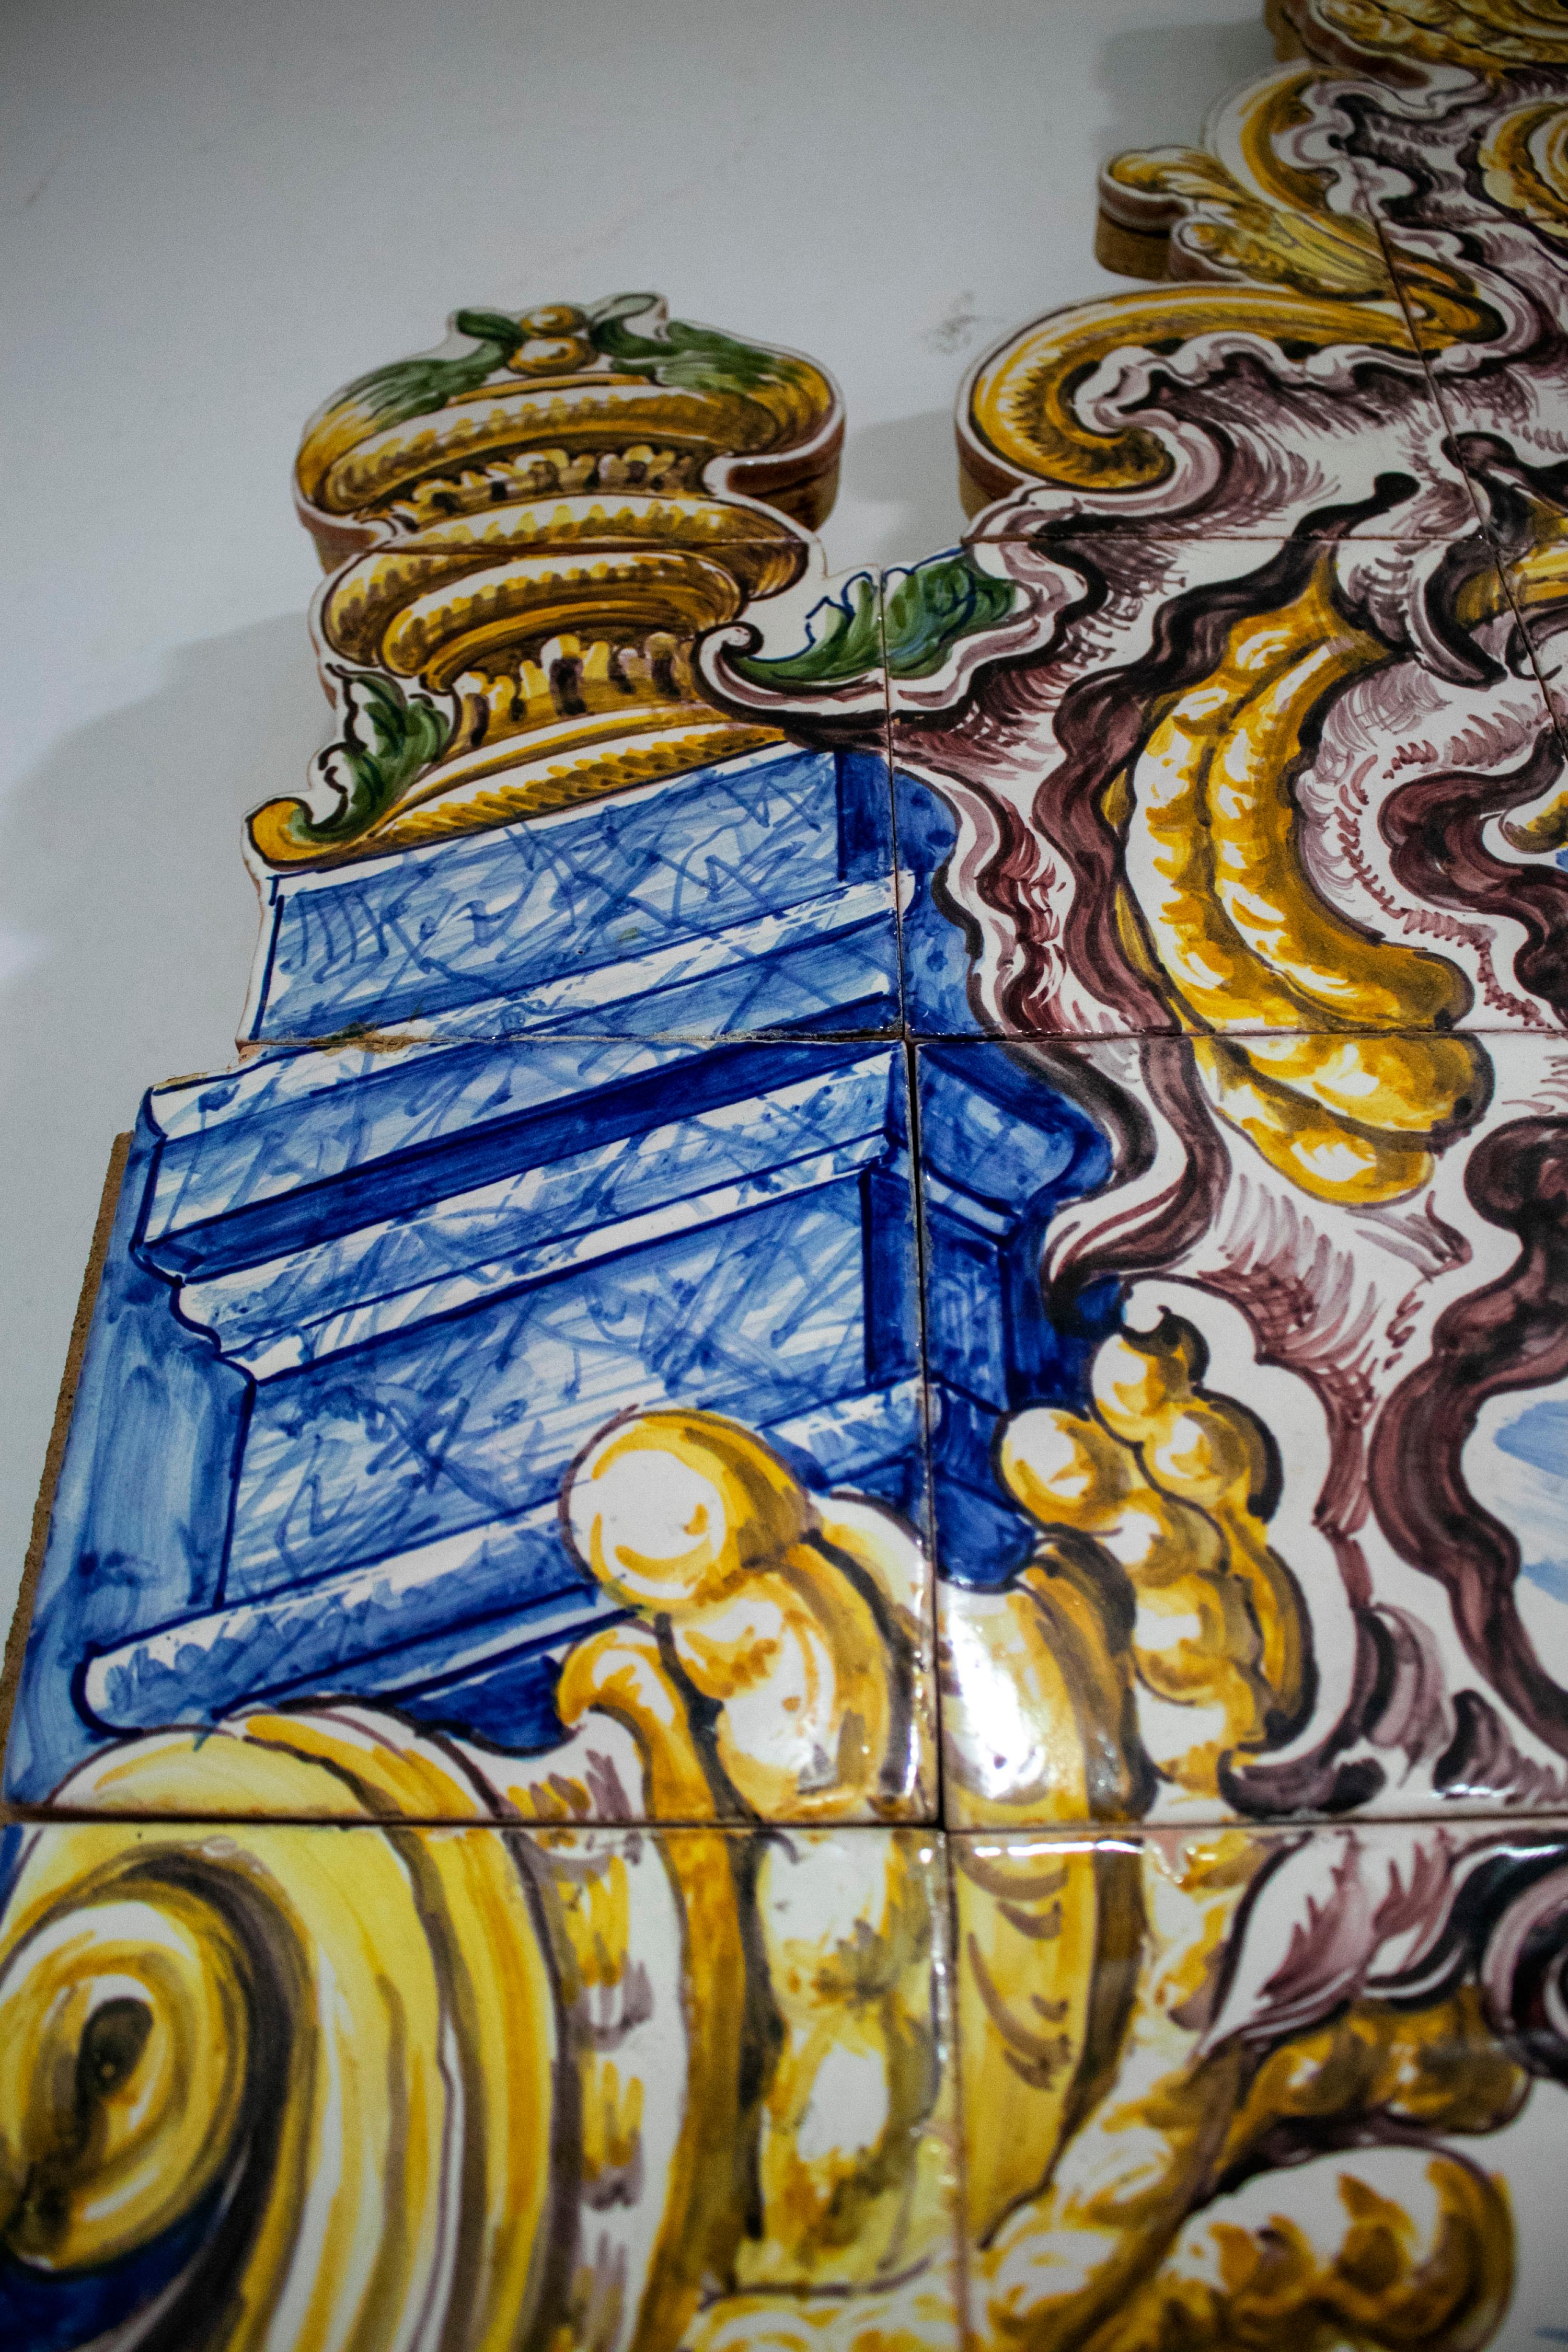 Mary with Child Portuguese Glazed Ceramic Tile Panel Signed M. M. Antunes 5